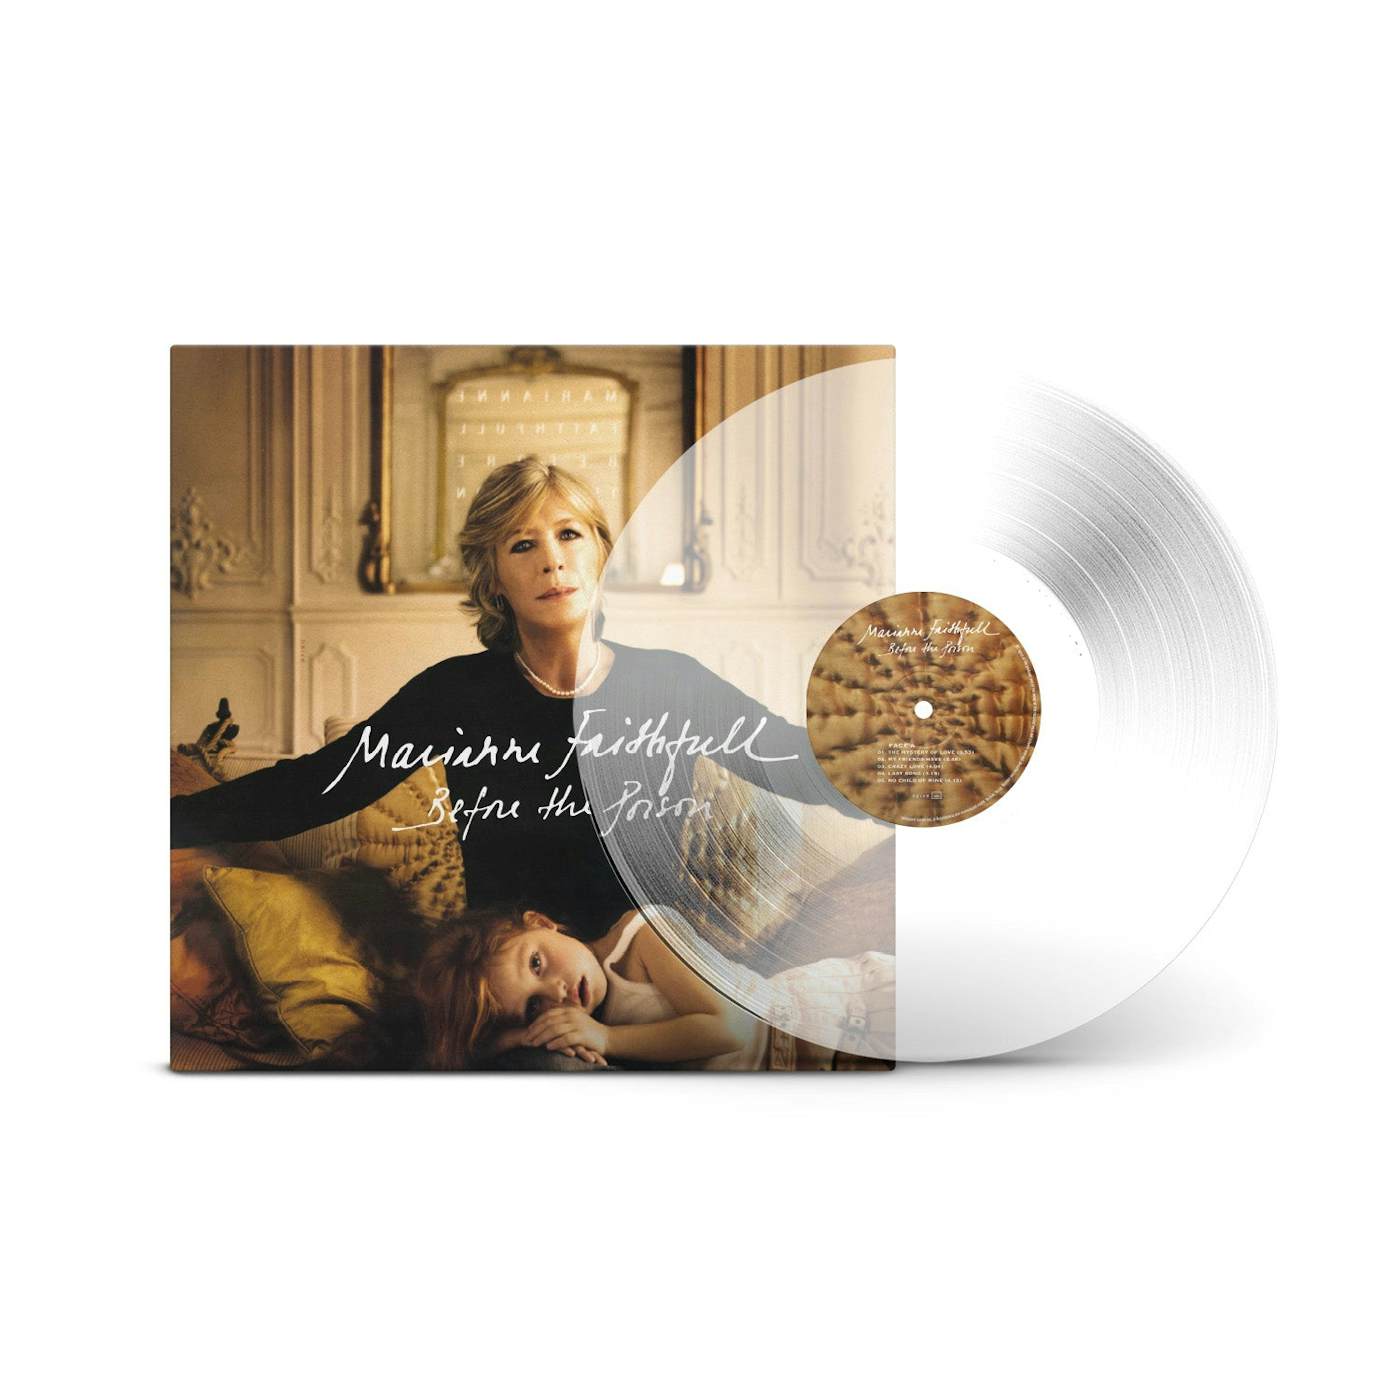 Marianne Faithfull / Before The Poison - LP CLEAR (Vinyl)